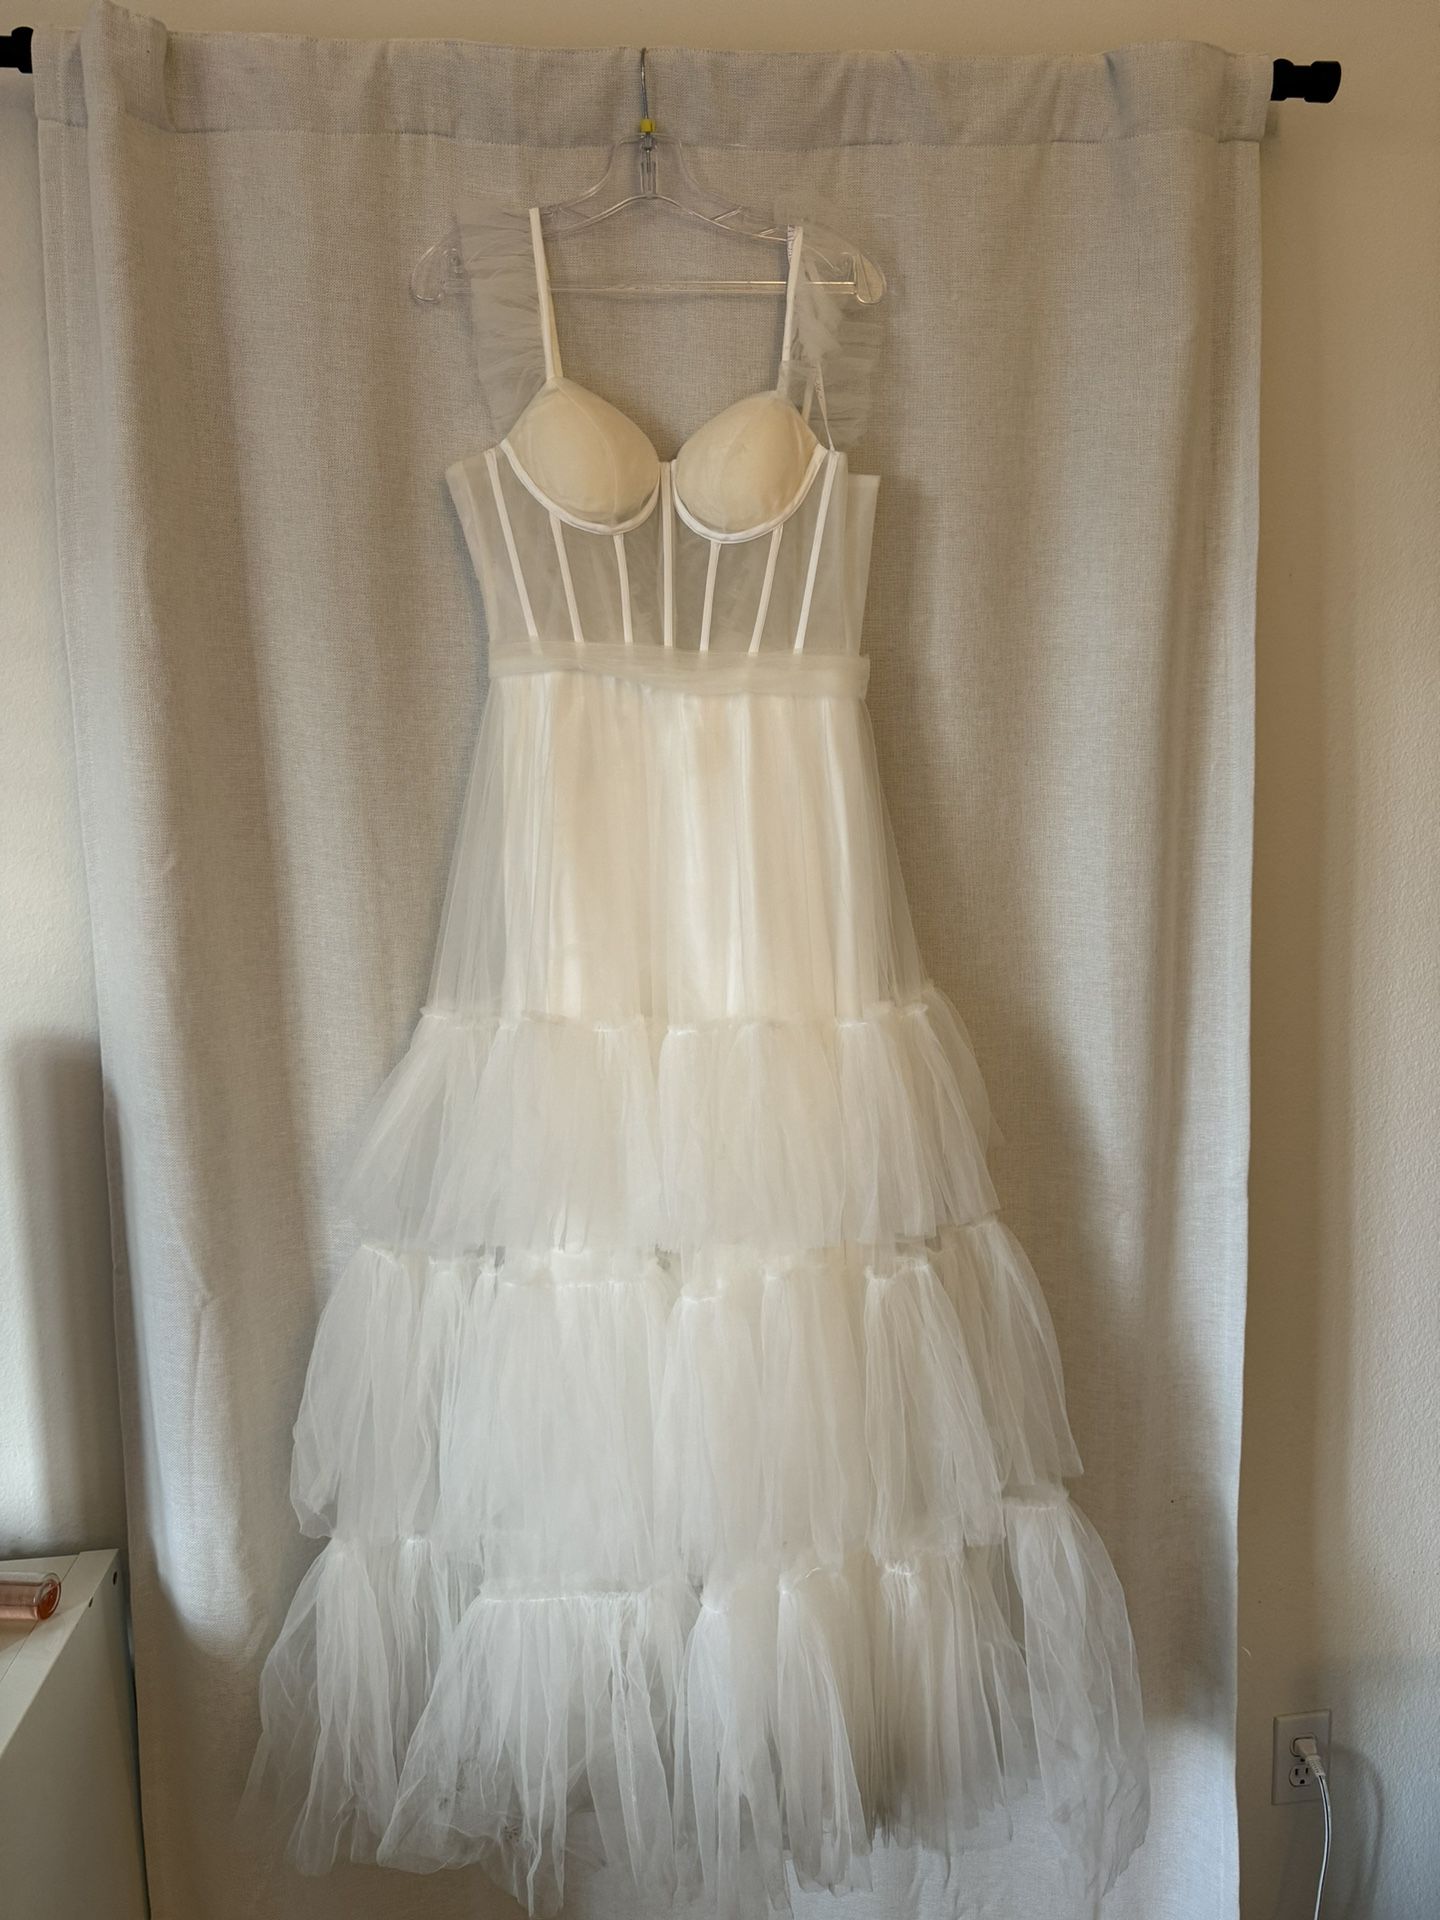 White Ball Gown/ Cake Cutting Wedding Dress